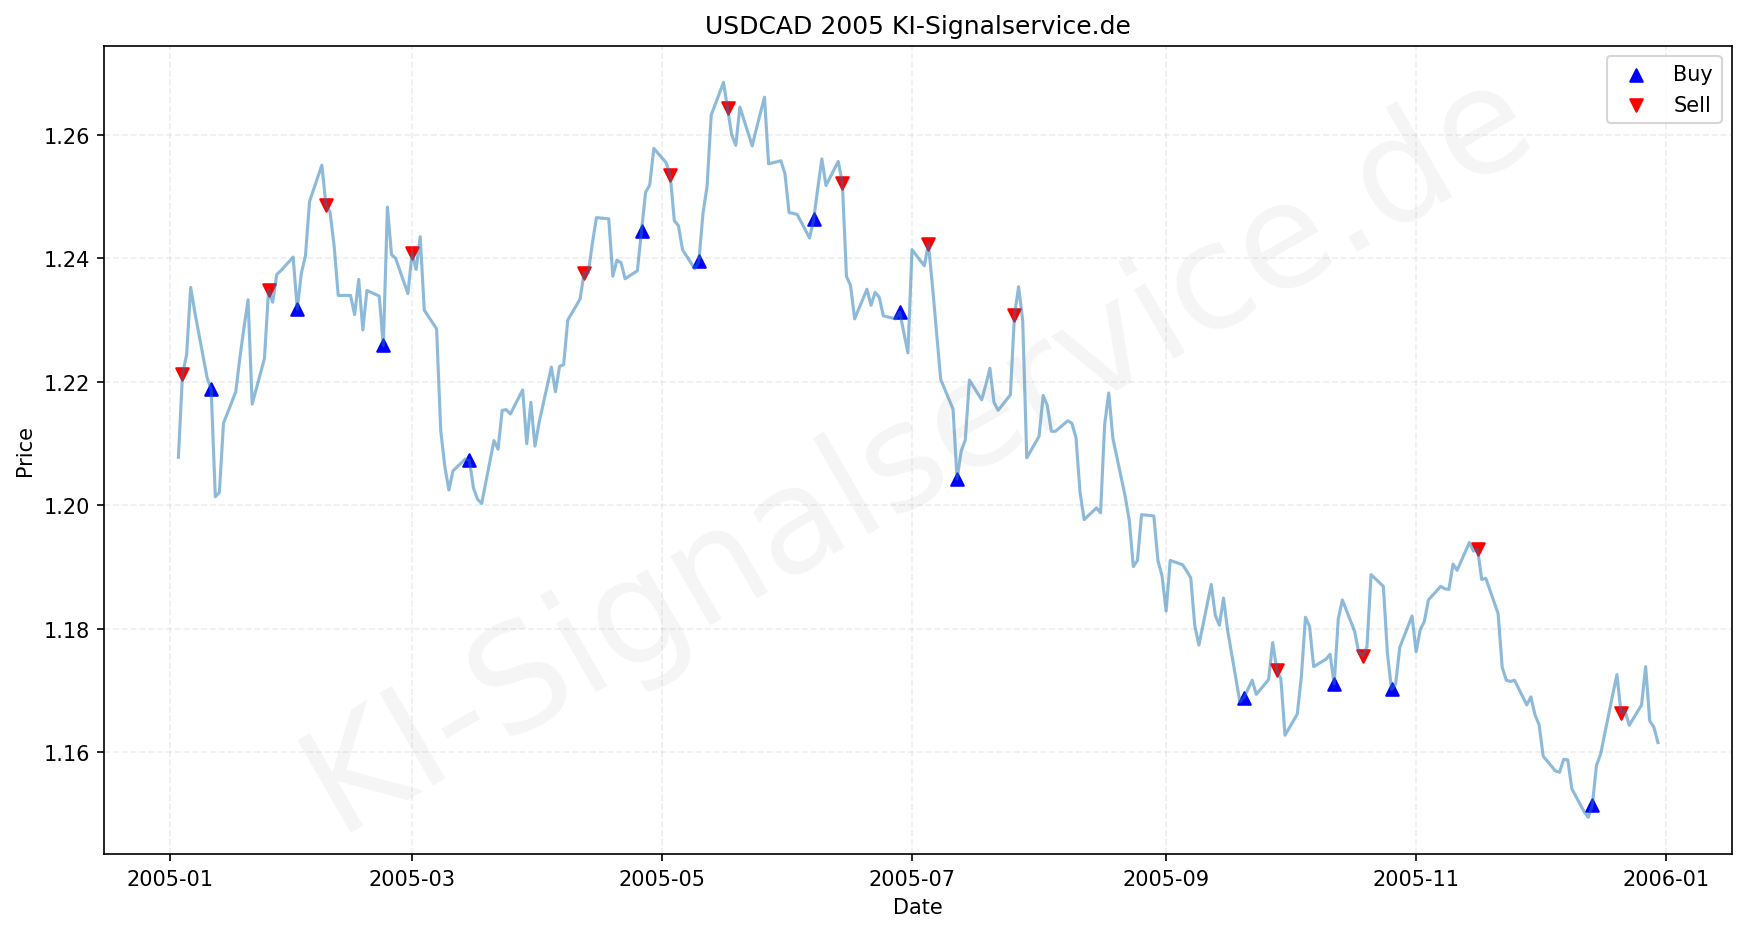 USDCAD Chart - KI Tradingsignale 2005